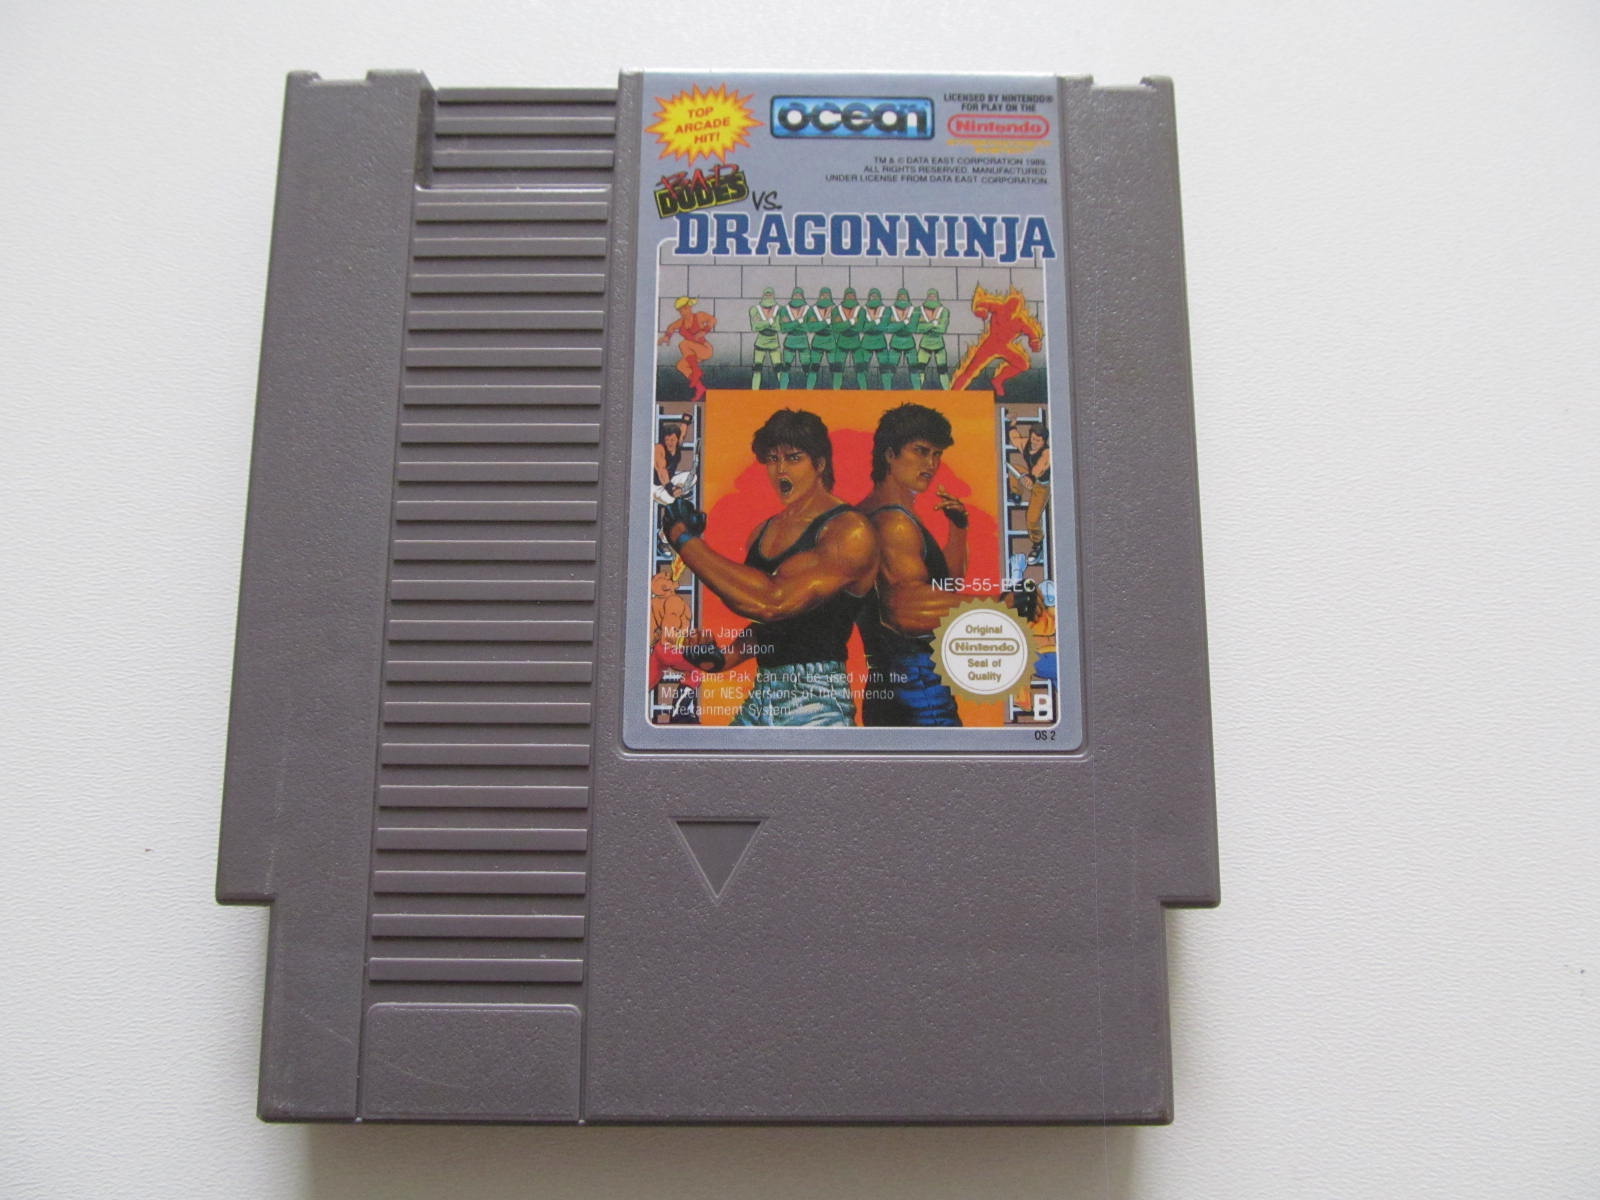 Bad Dudes vs. Dragon Ninja